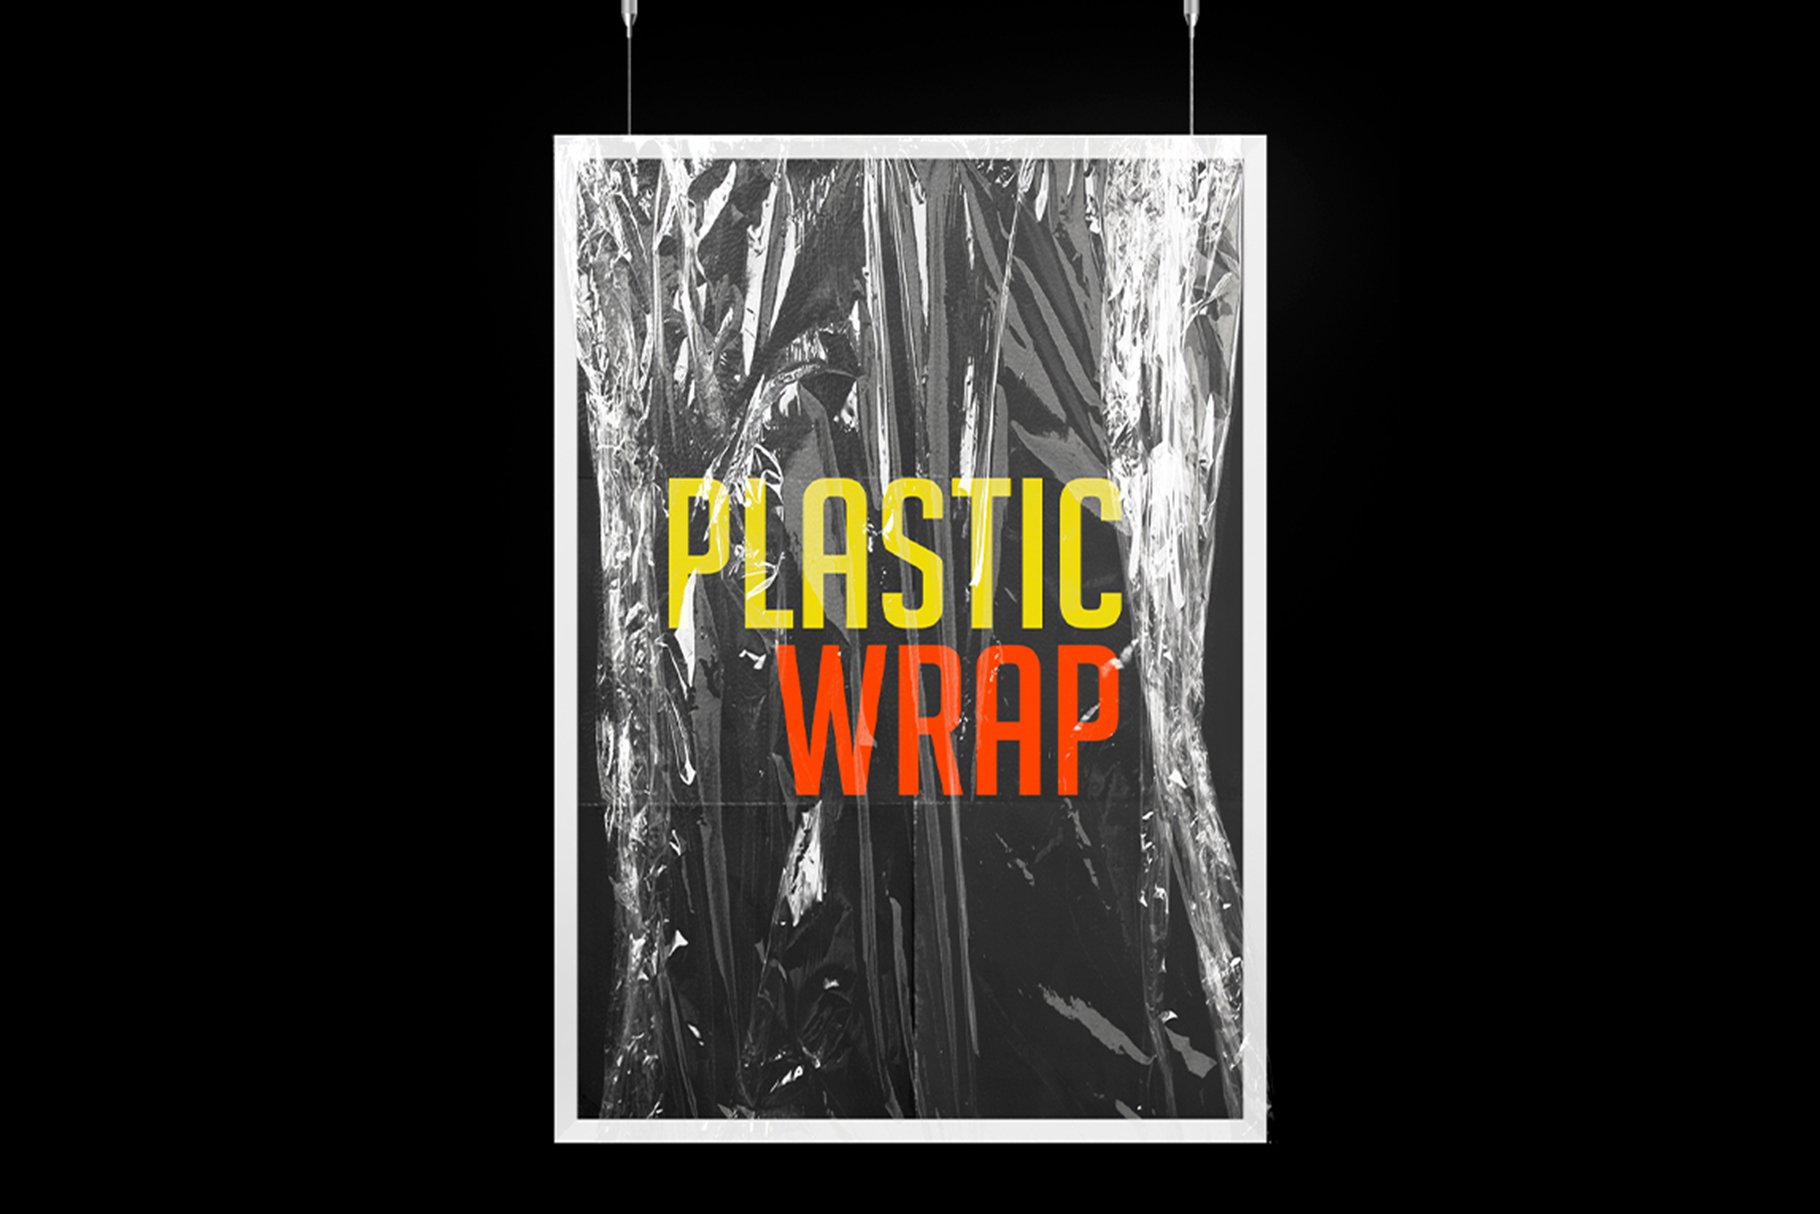 Plastic wrap preview.